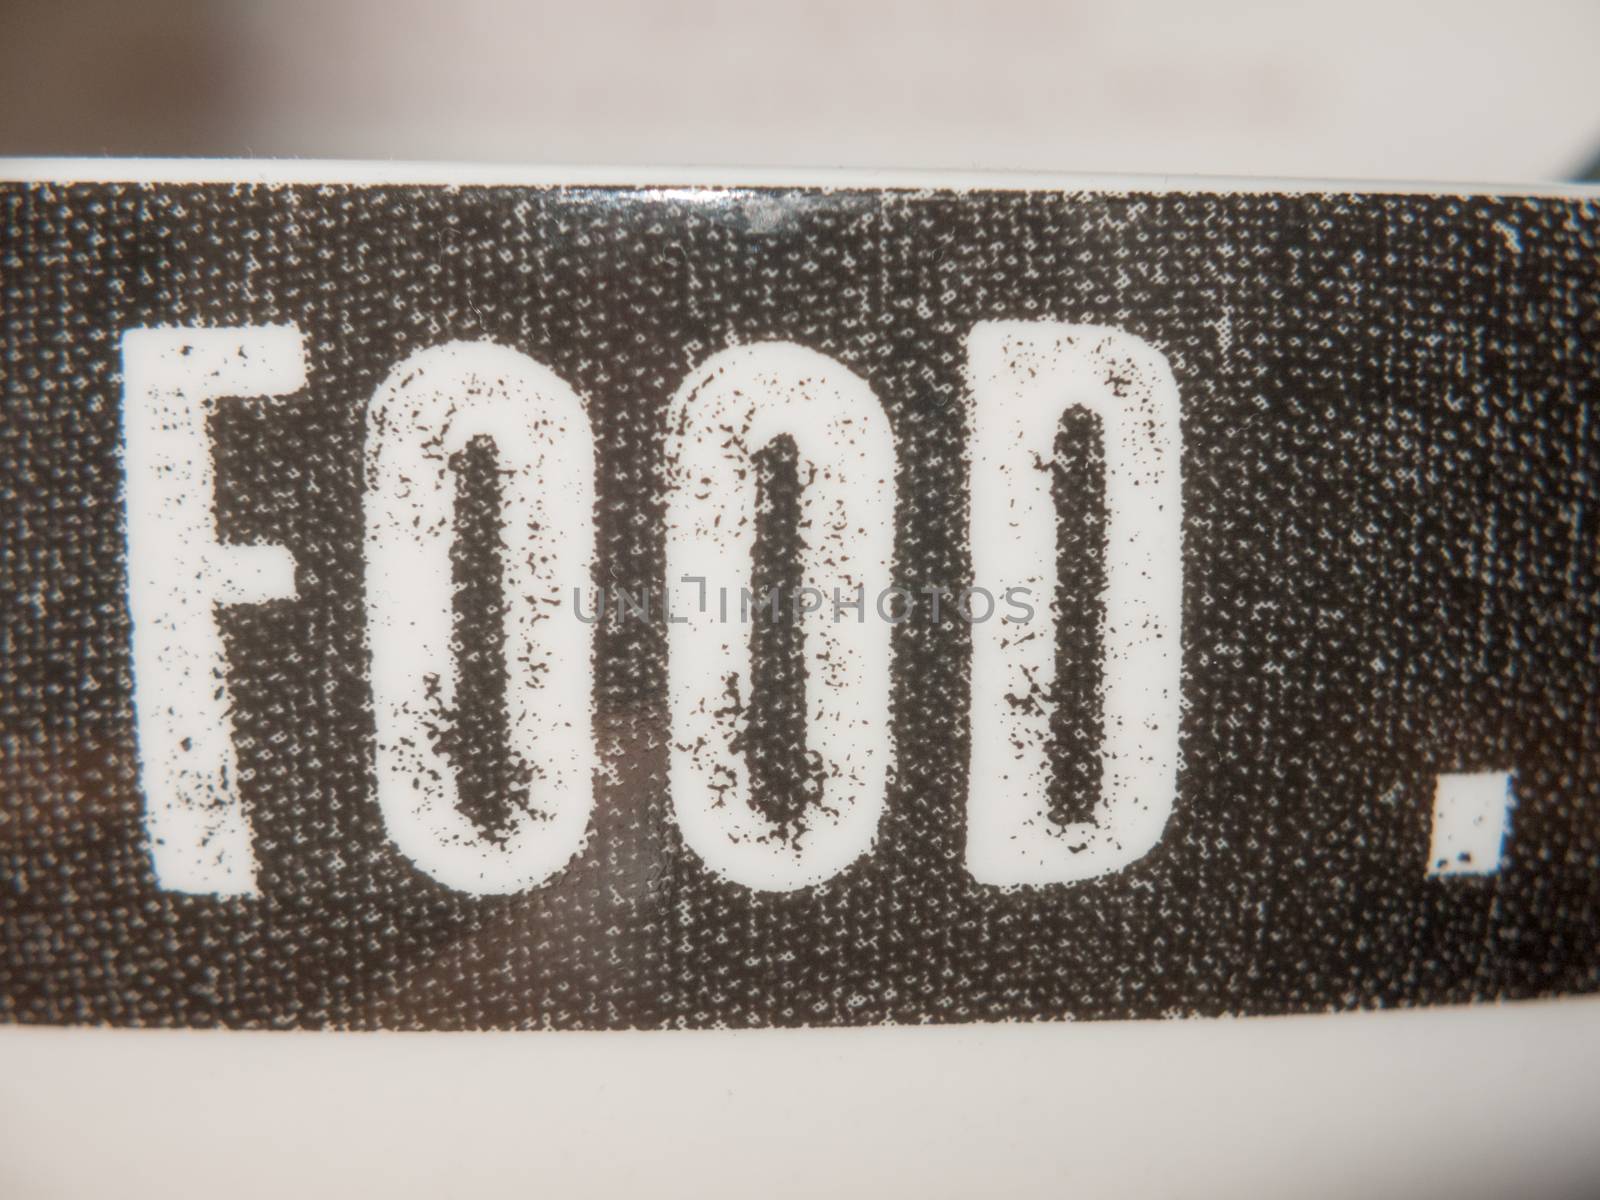 close up of side detail words lettering on side of bowl Food.; essex; england; uk